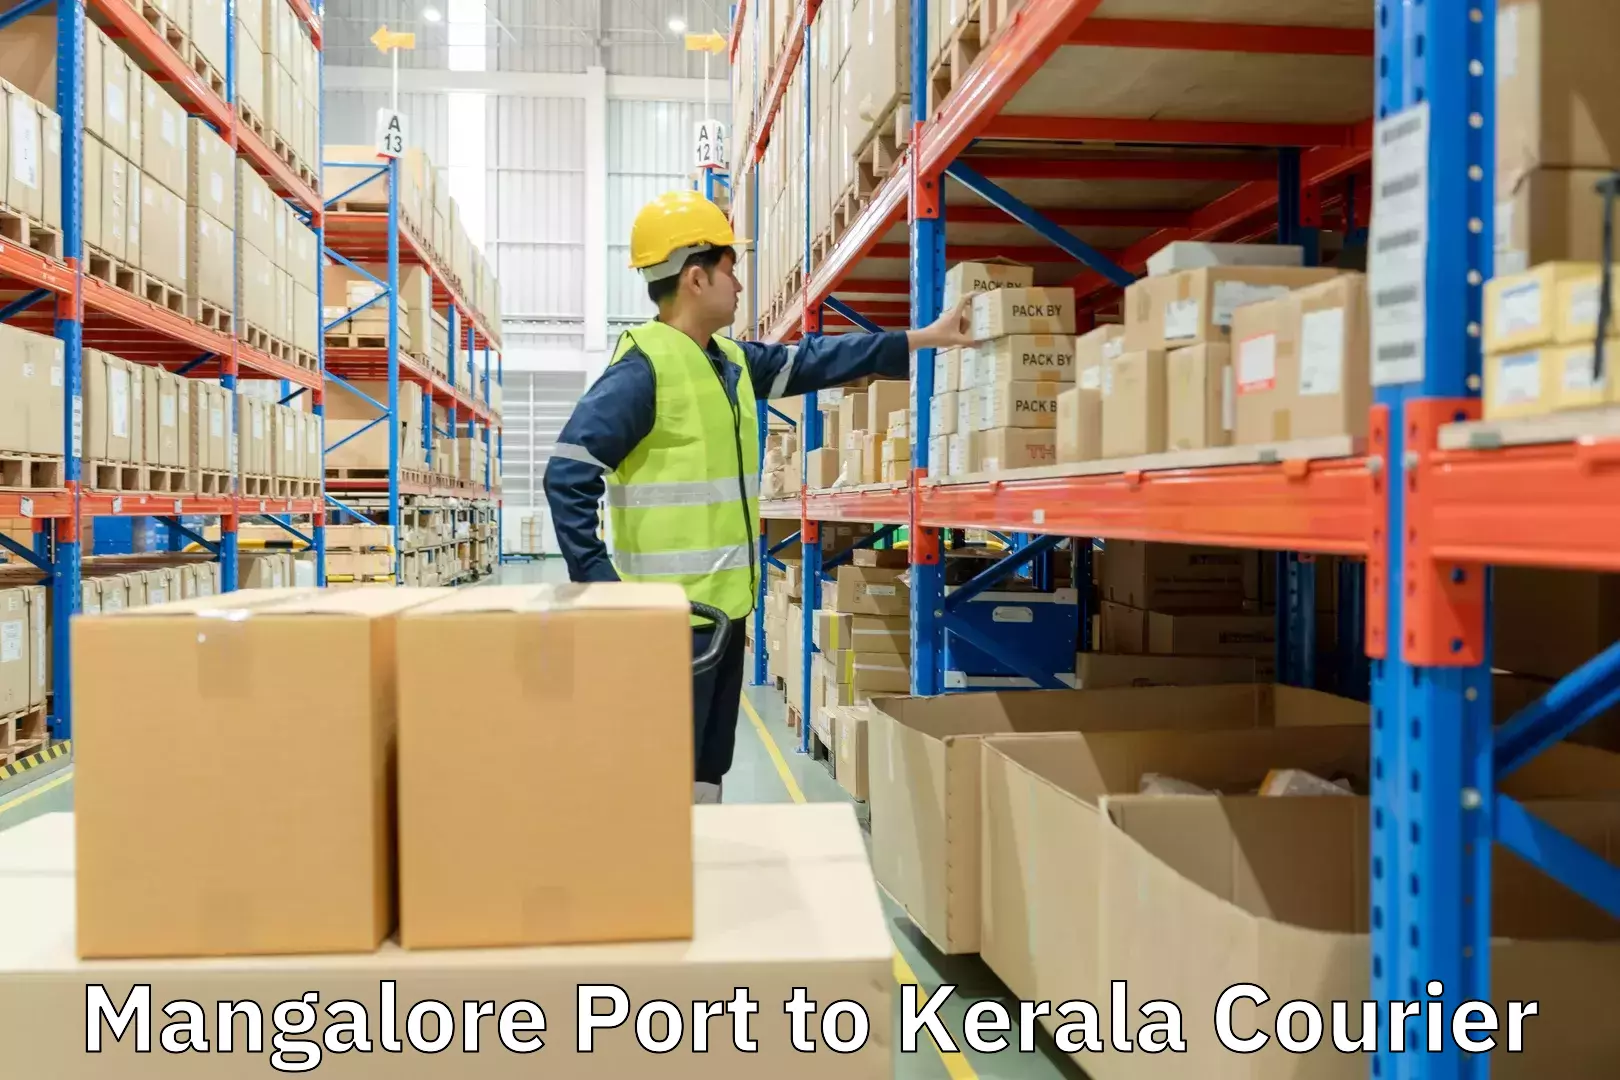 Logistics service provider Mangalore Port to Kerala